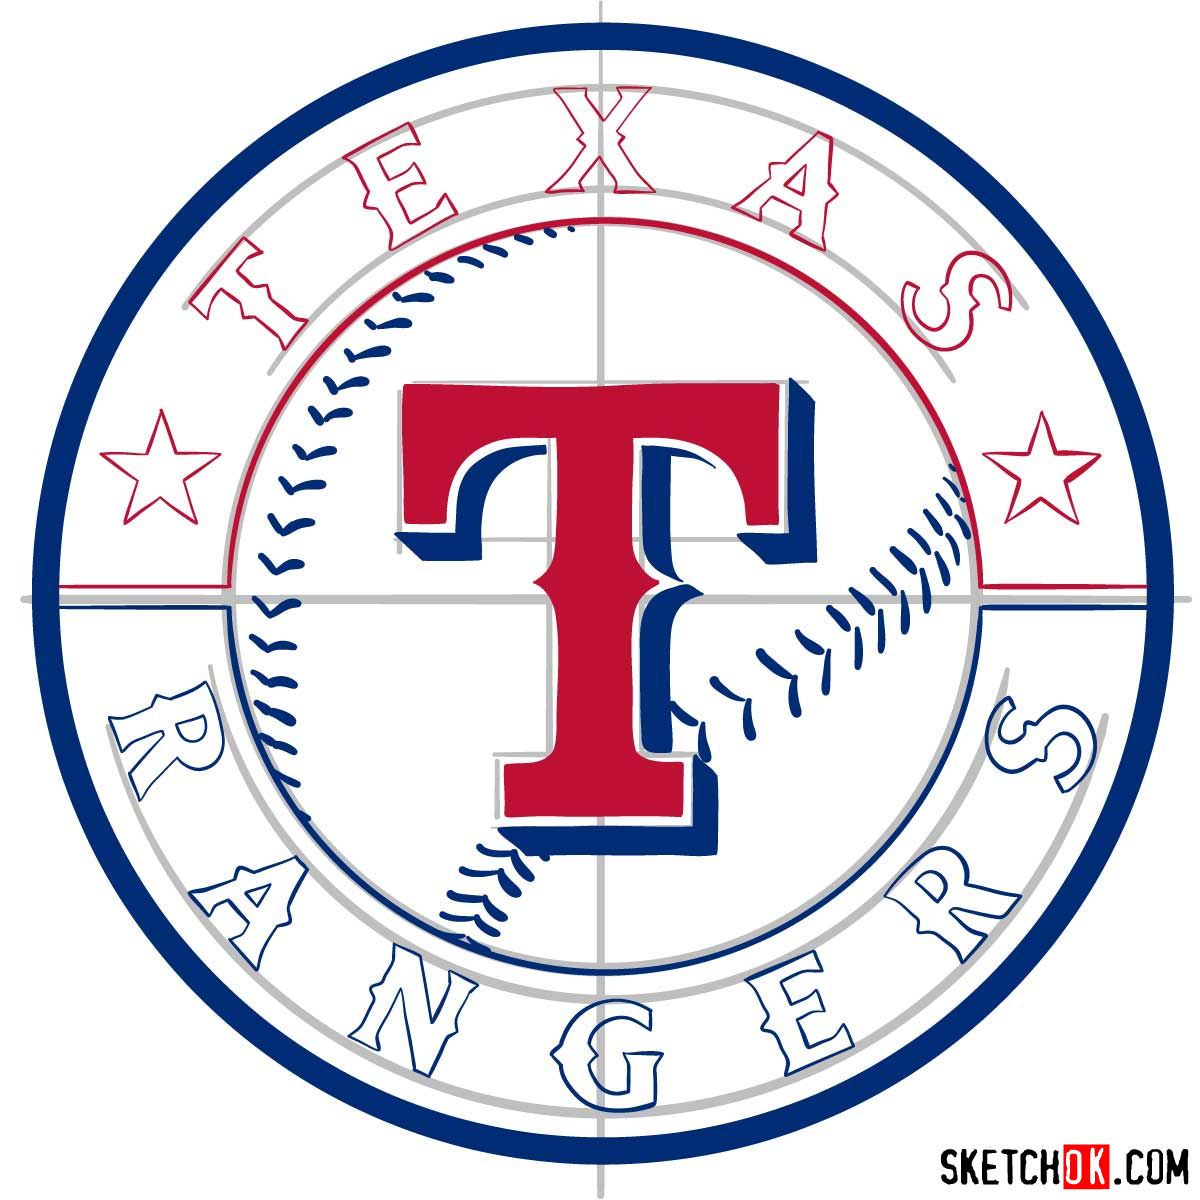 How to draw Texas Rangers logo | MLB logos - Sketchok easy drawing guides